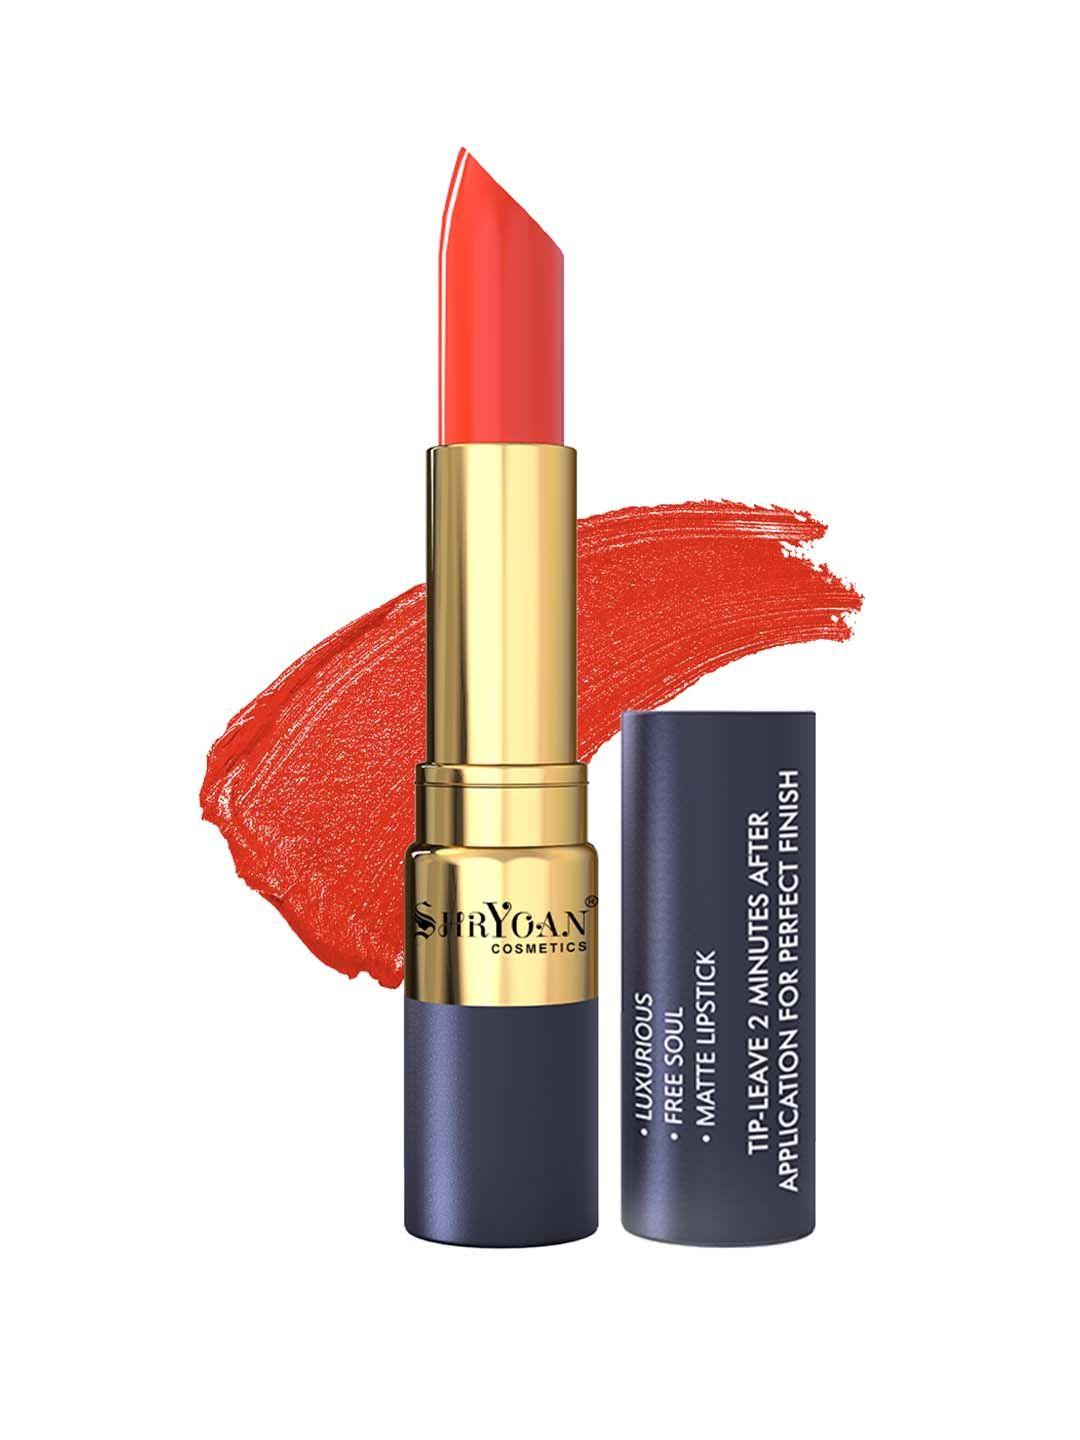 shryoan luxurious free soul matte lipstick - 3.8 gm